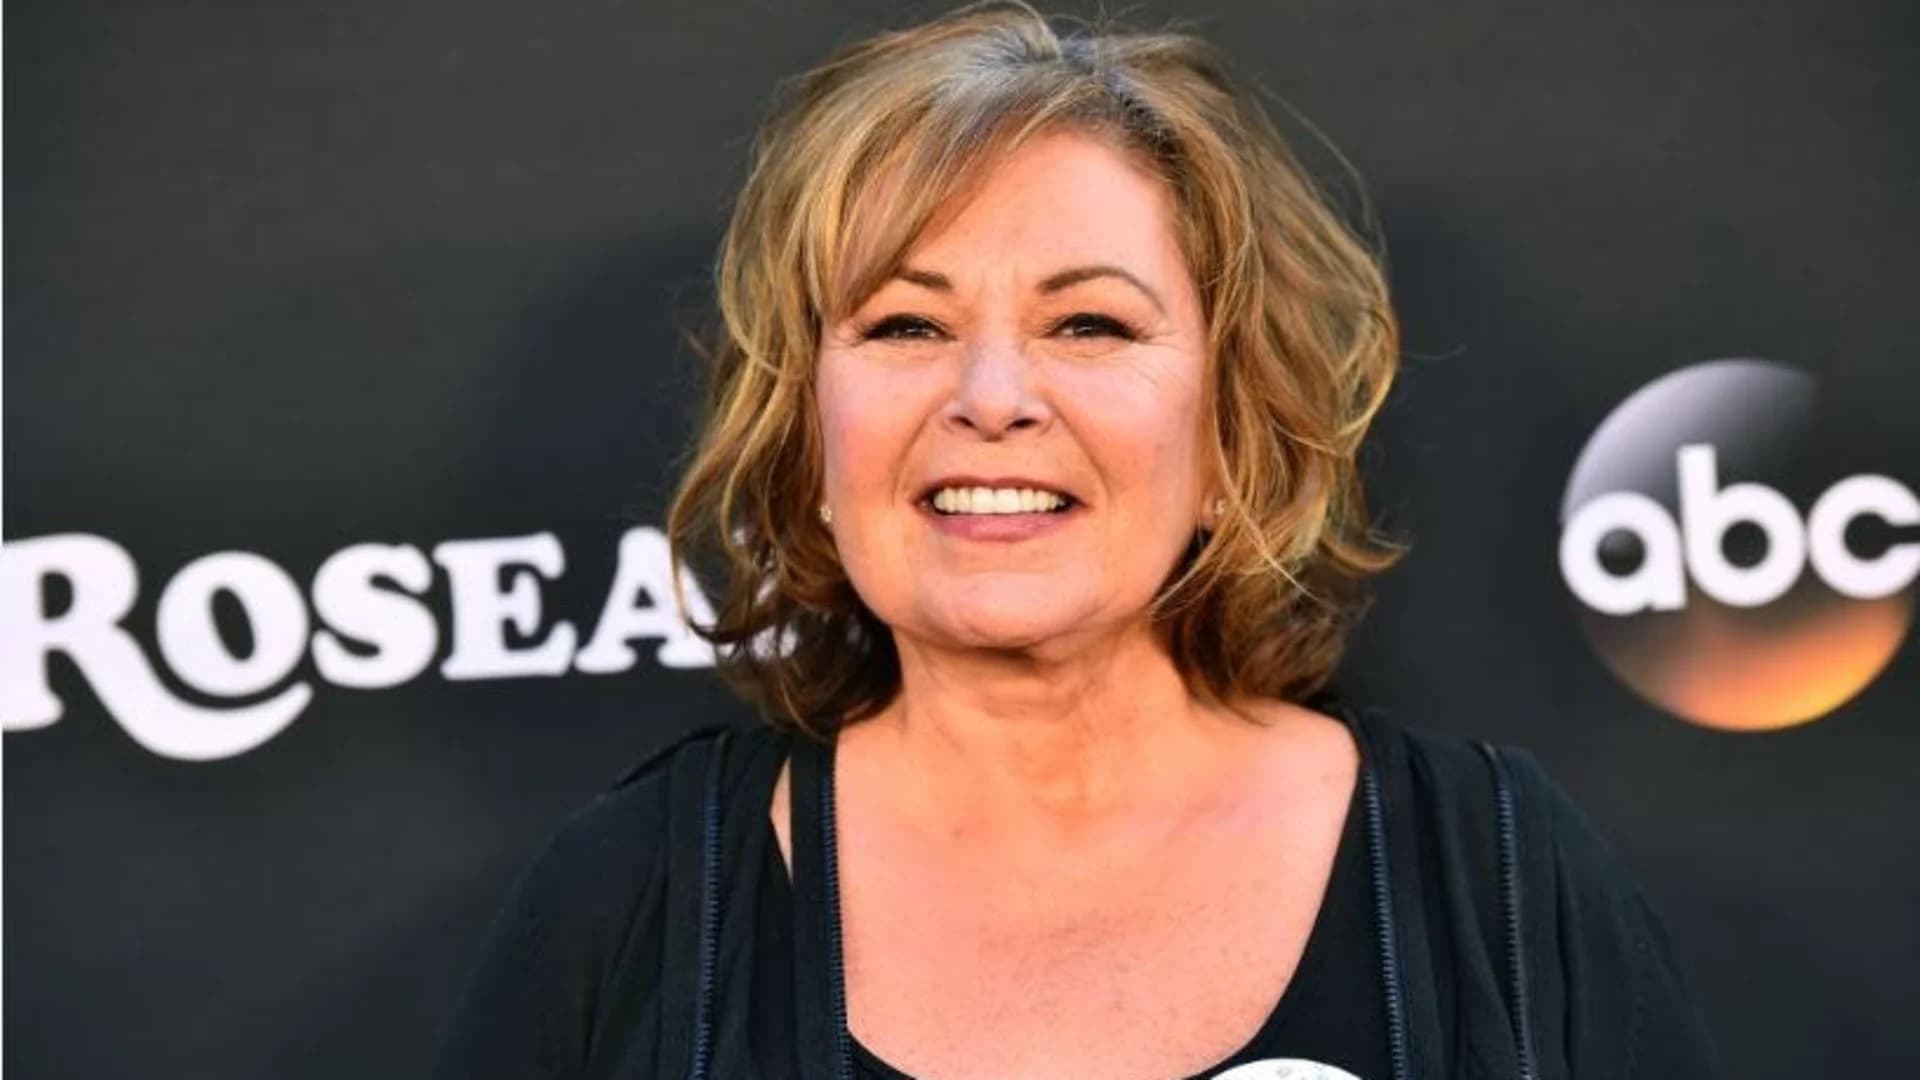 ABC cancels 'Roseanne' following star's racist tweet